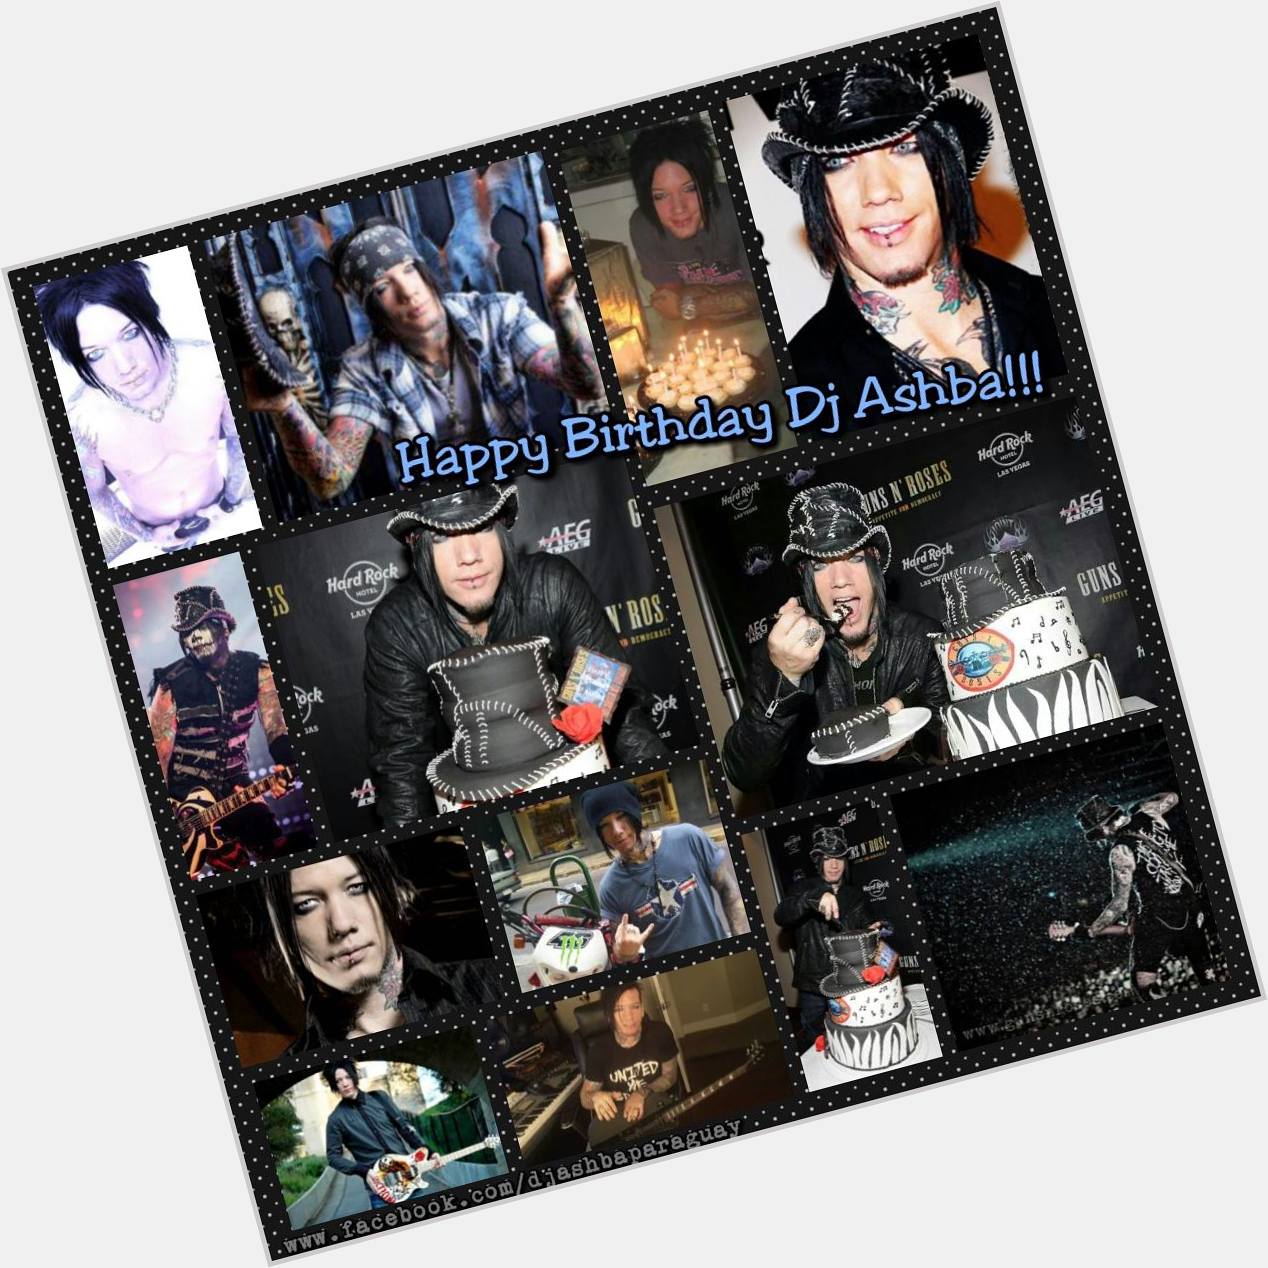  Happy Birthday for the greatest guitarist of this world!Much love DJ! We love you!Feliz cumpleaños DJ Ashba! 